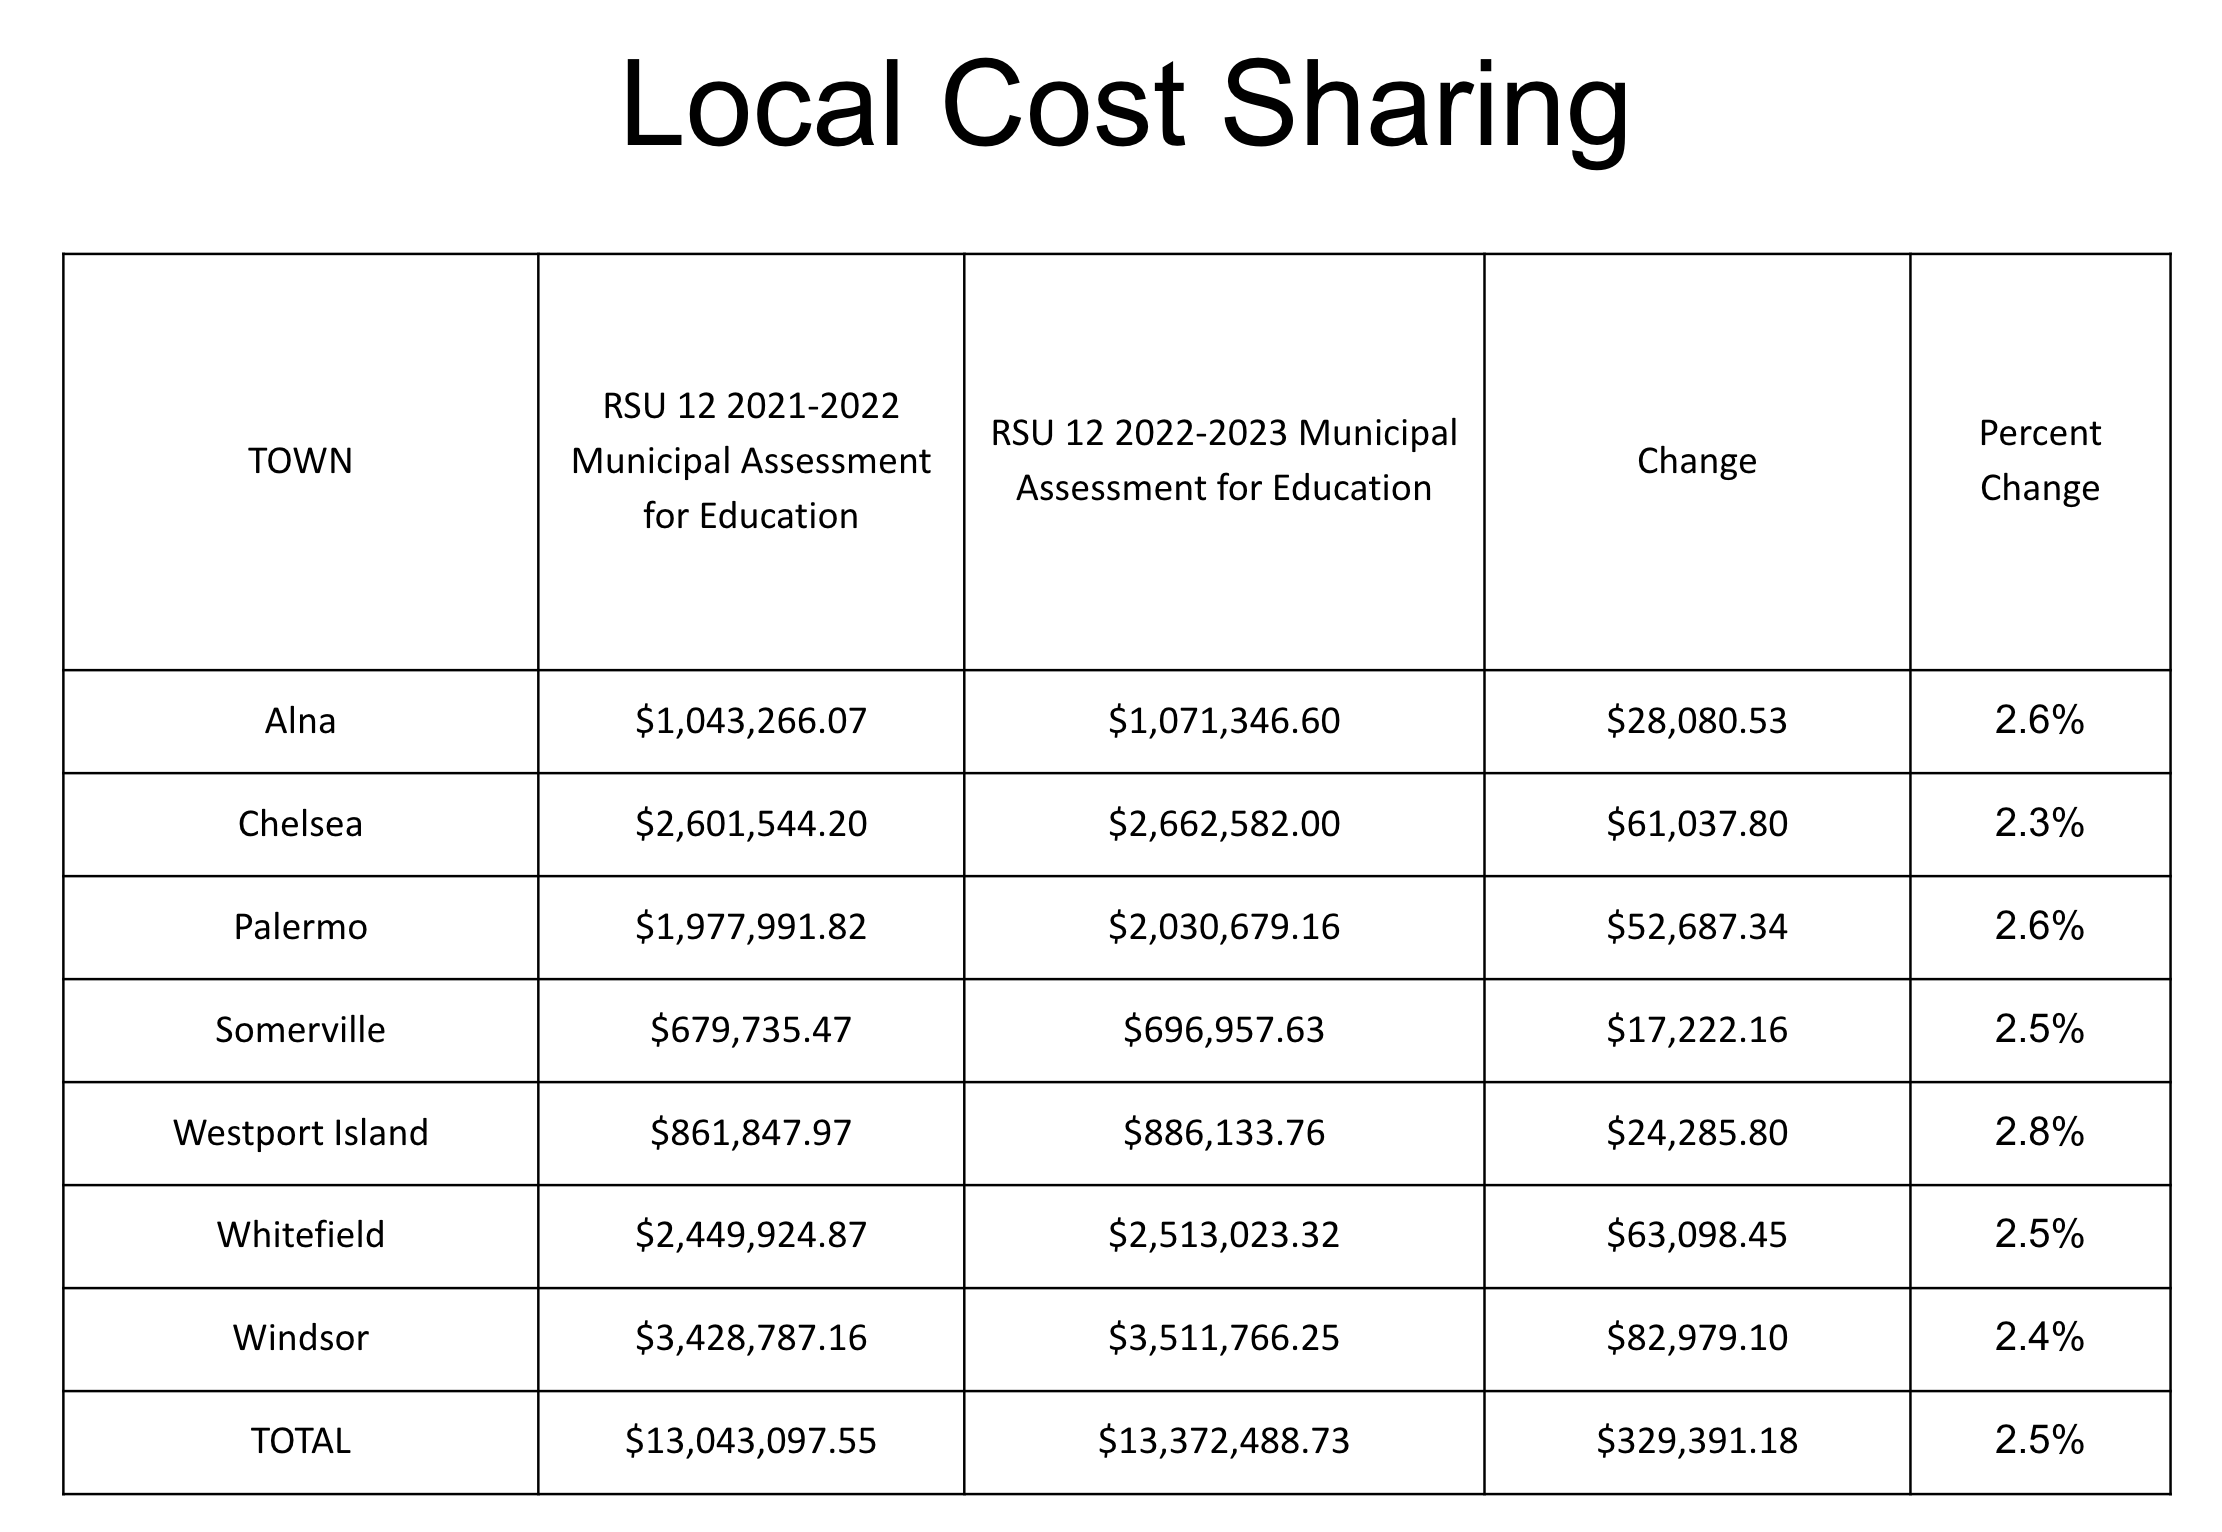 Local Cost Sharing Amounts